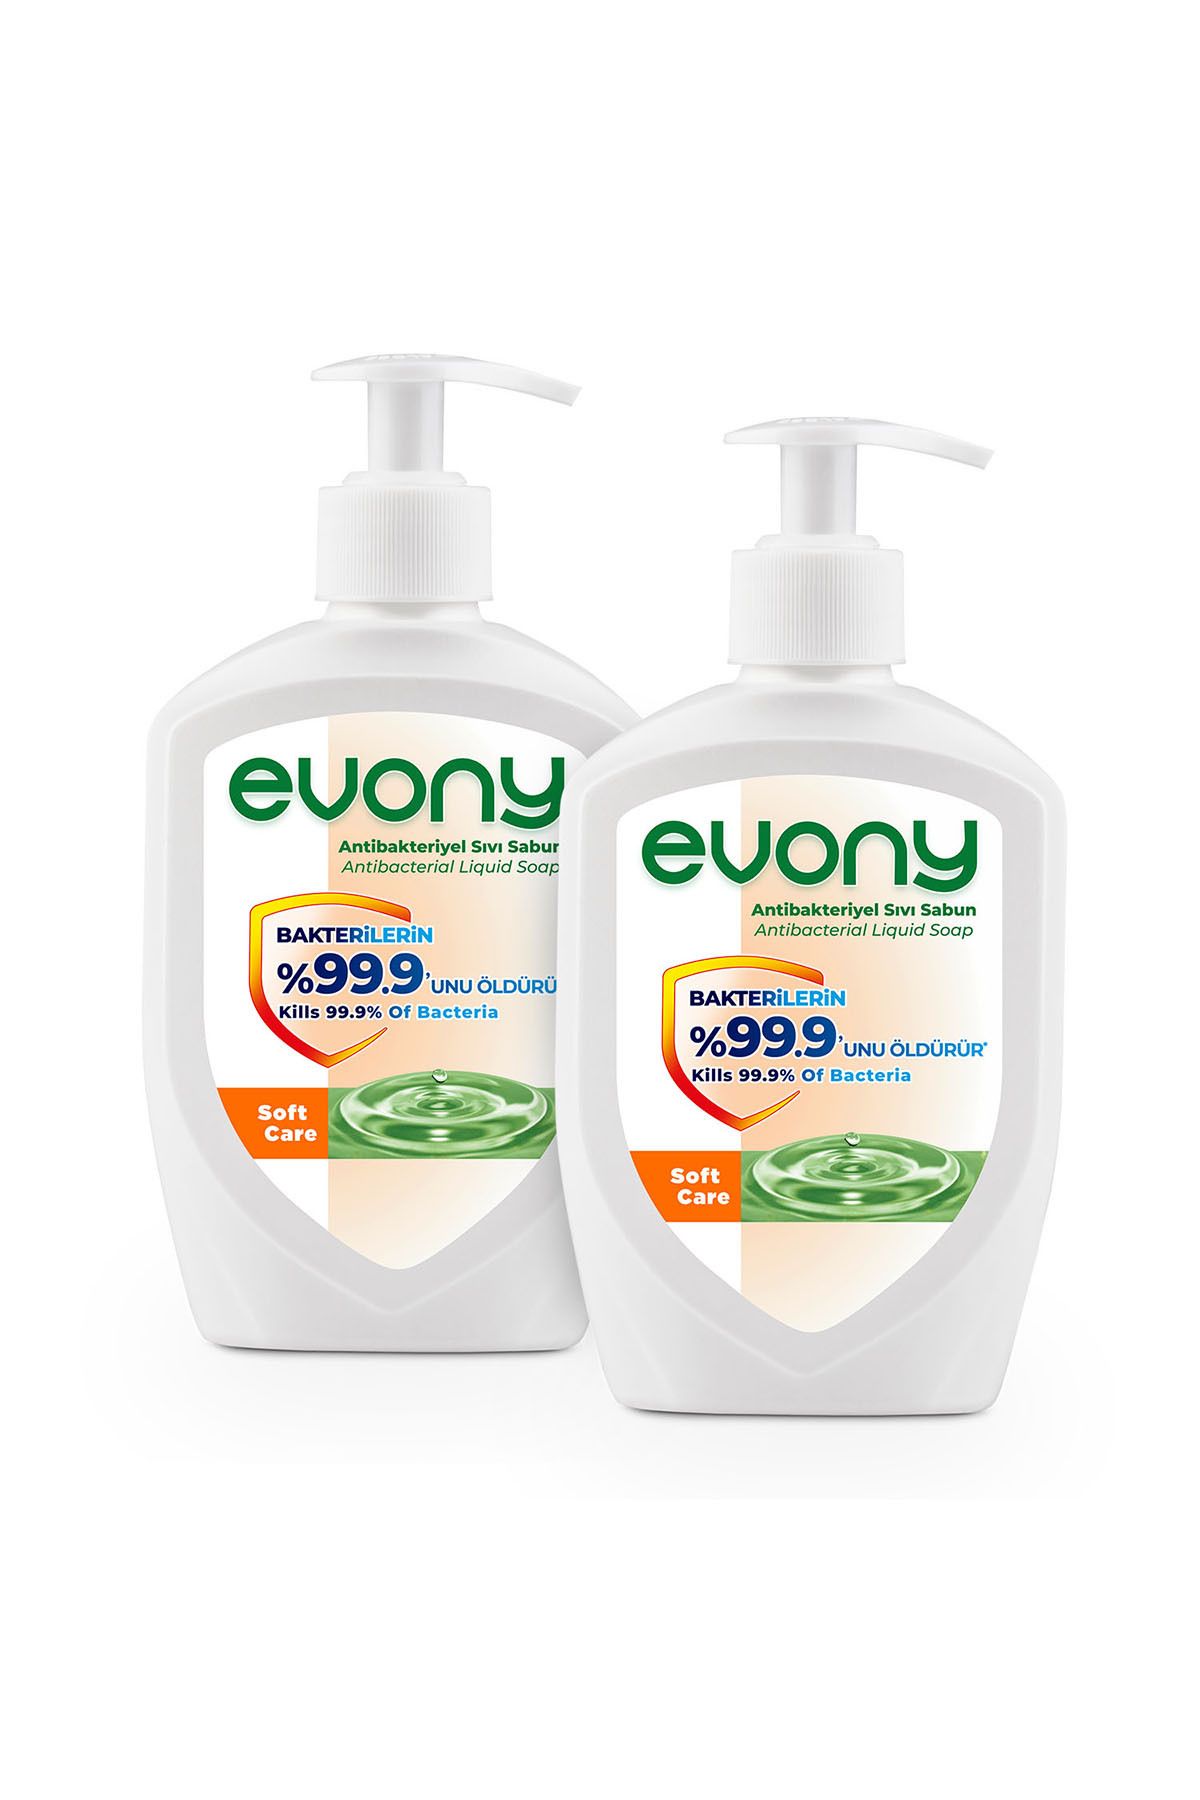 Evony Antibakteriyel Sıvı Sabun Soft Care 300ml 2 Adet